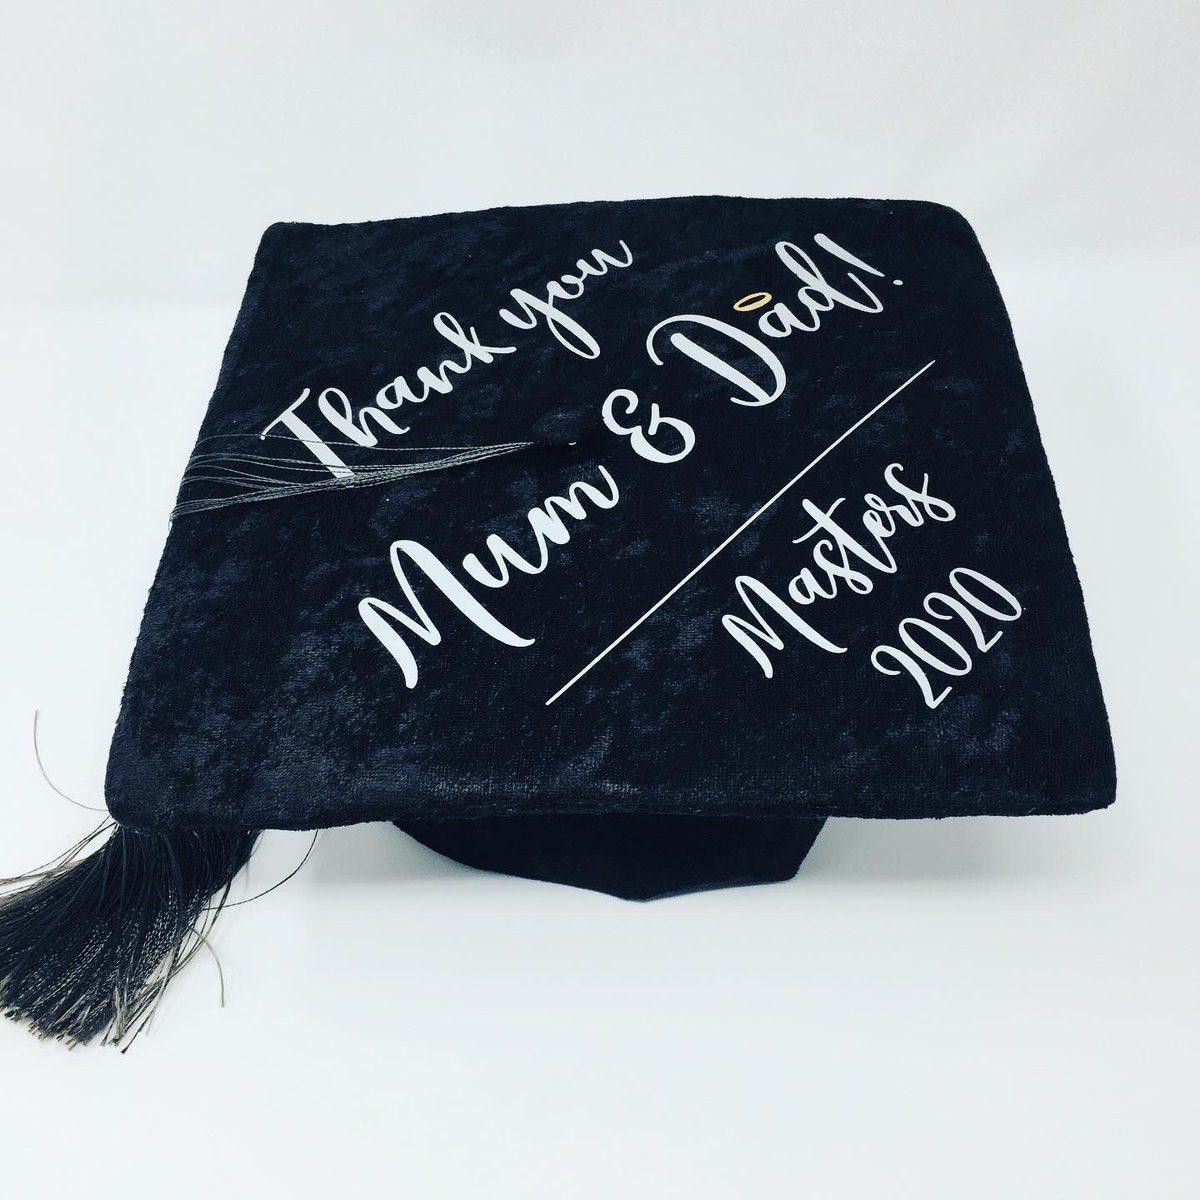 Custom printed graduation cap to make that day extra special ✨

#GiftDesigns #giftdesignsforyou #graduationcap #customprint #personalisedgifts #designedforyou #makeitspecial